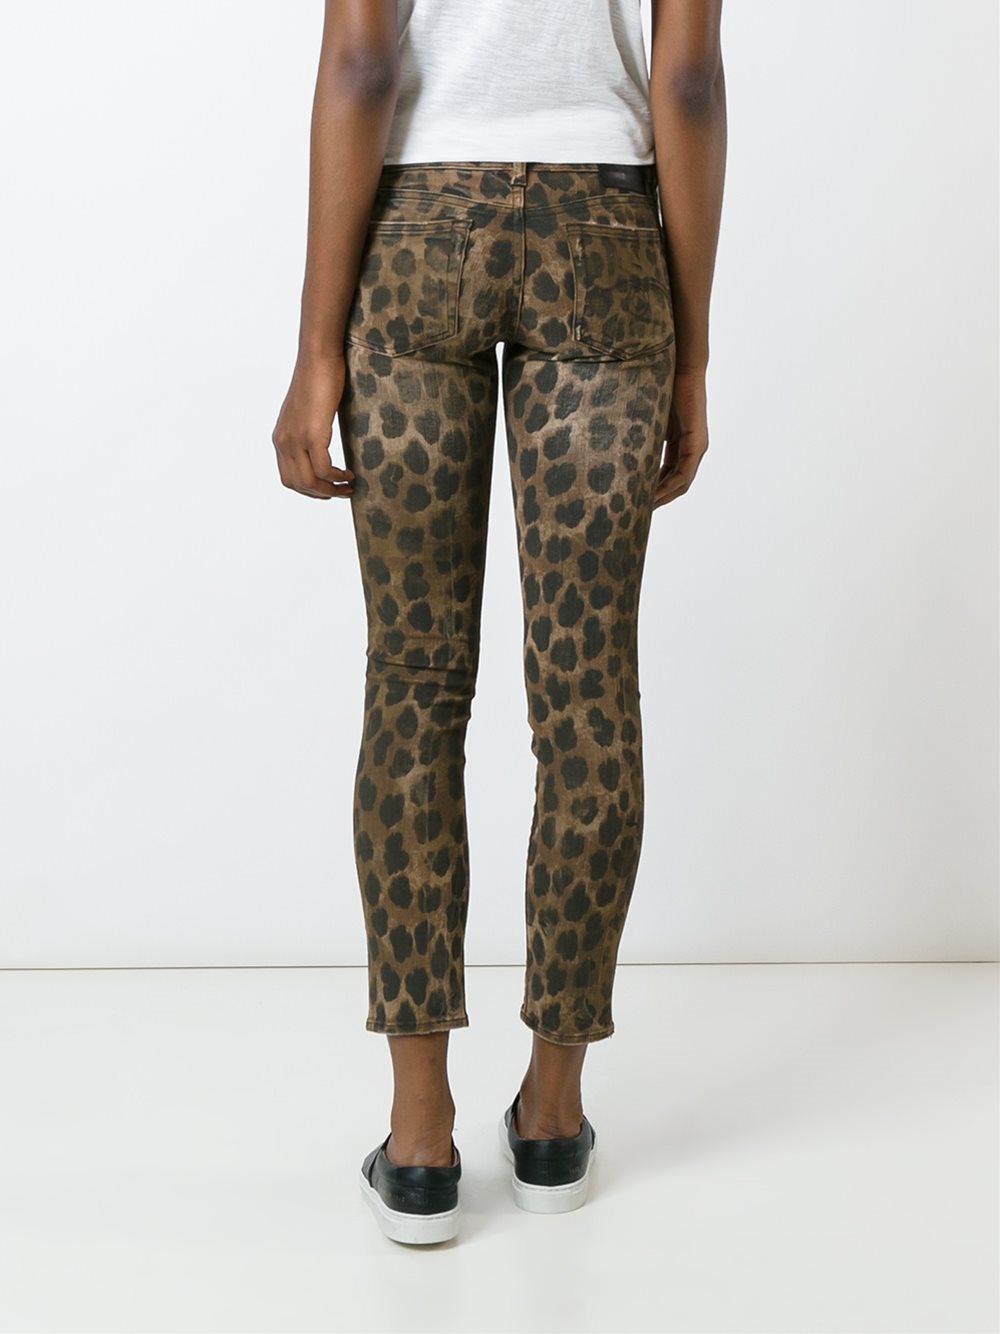 Lyst - R13 Leopard Print Skinny Jeans in Brown